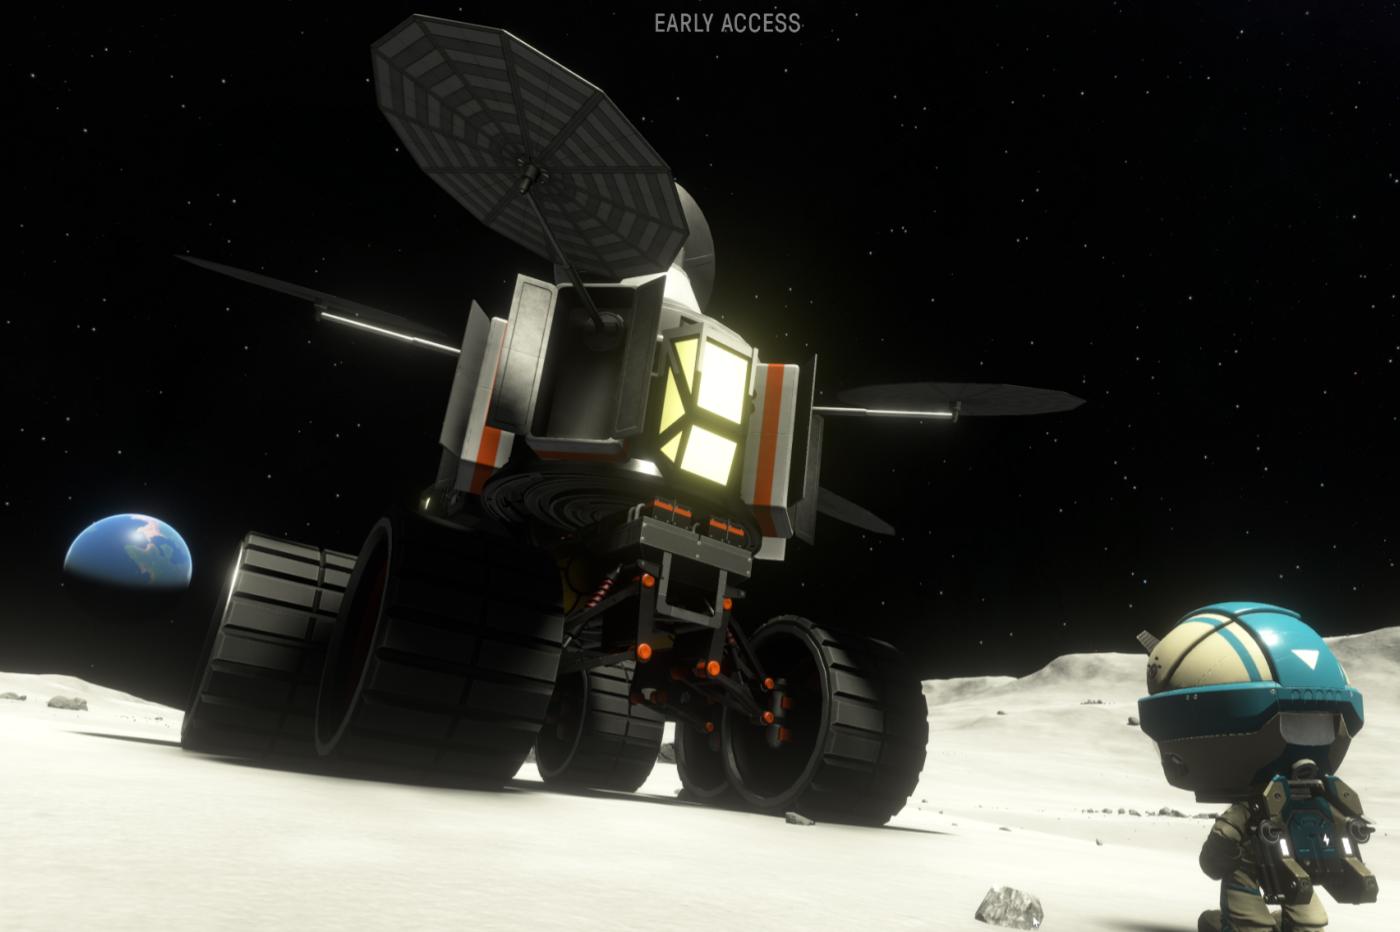 kerbal space program 2 capture d'écran d'un rover